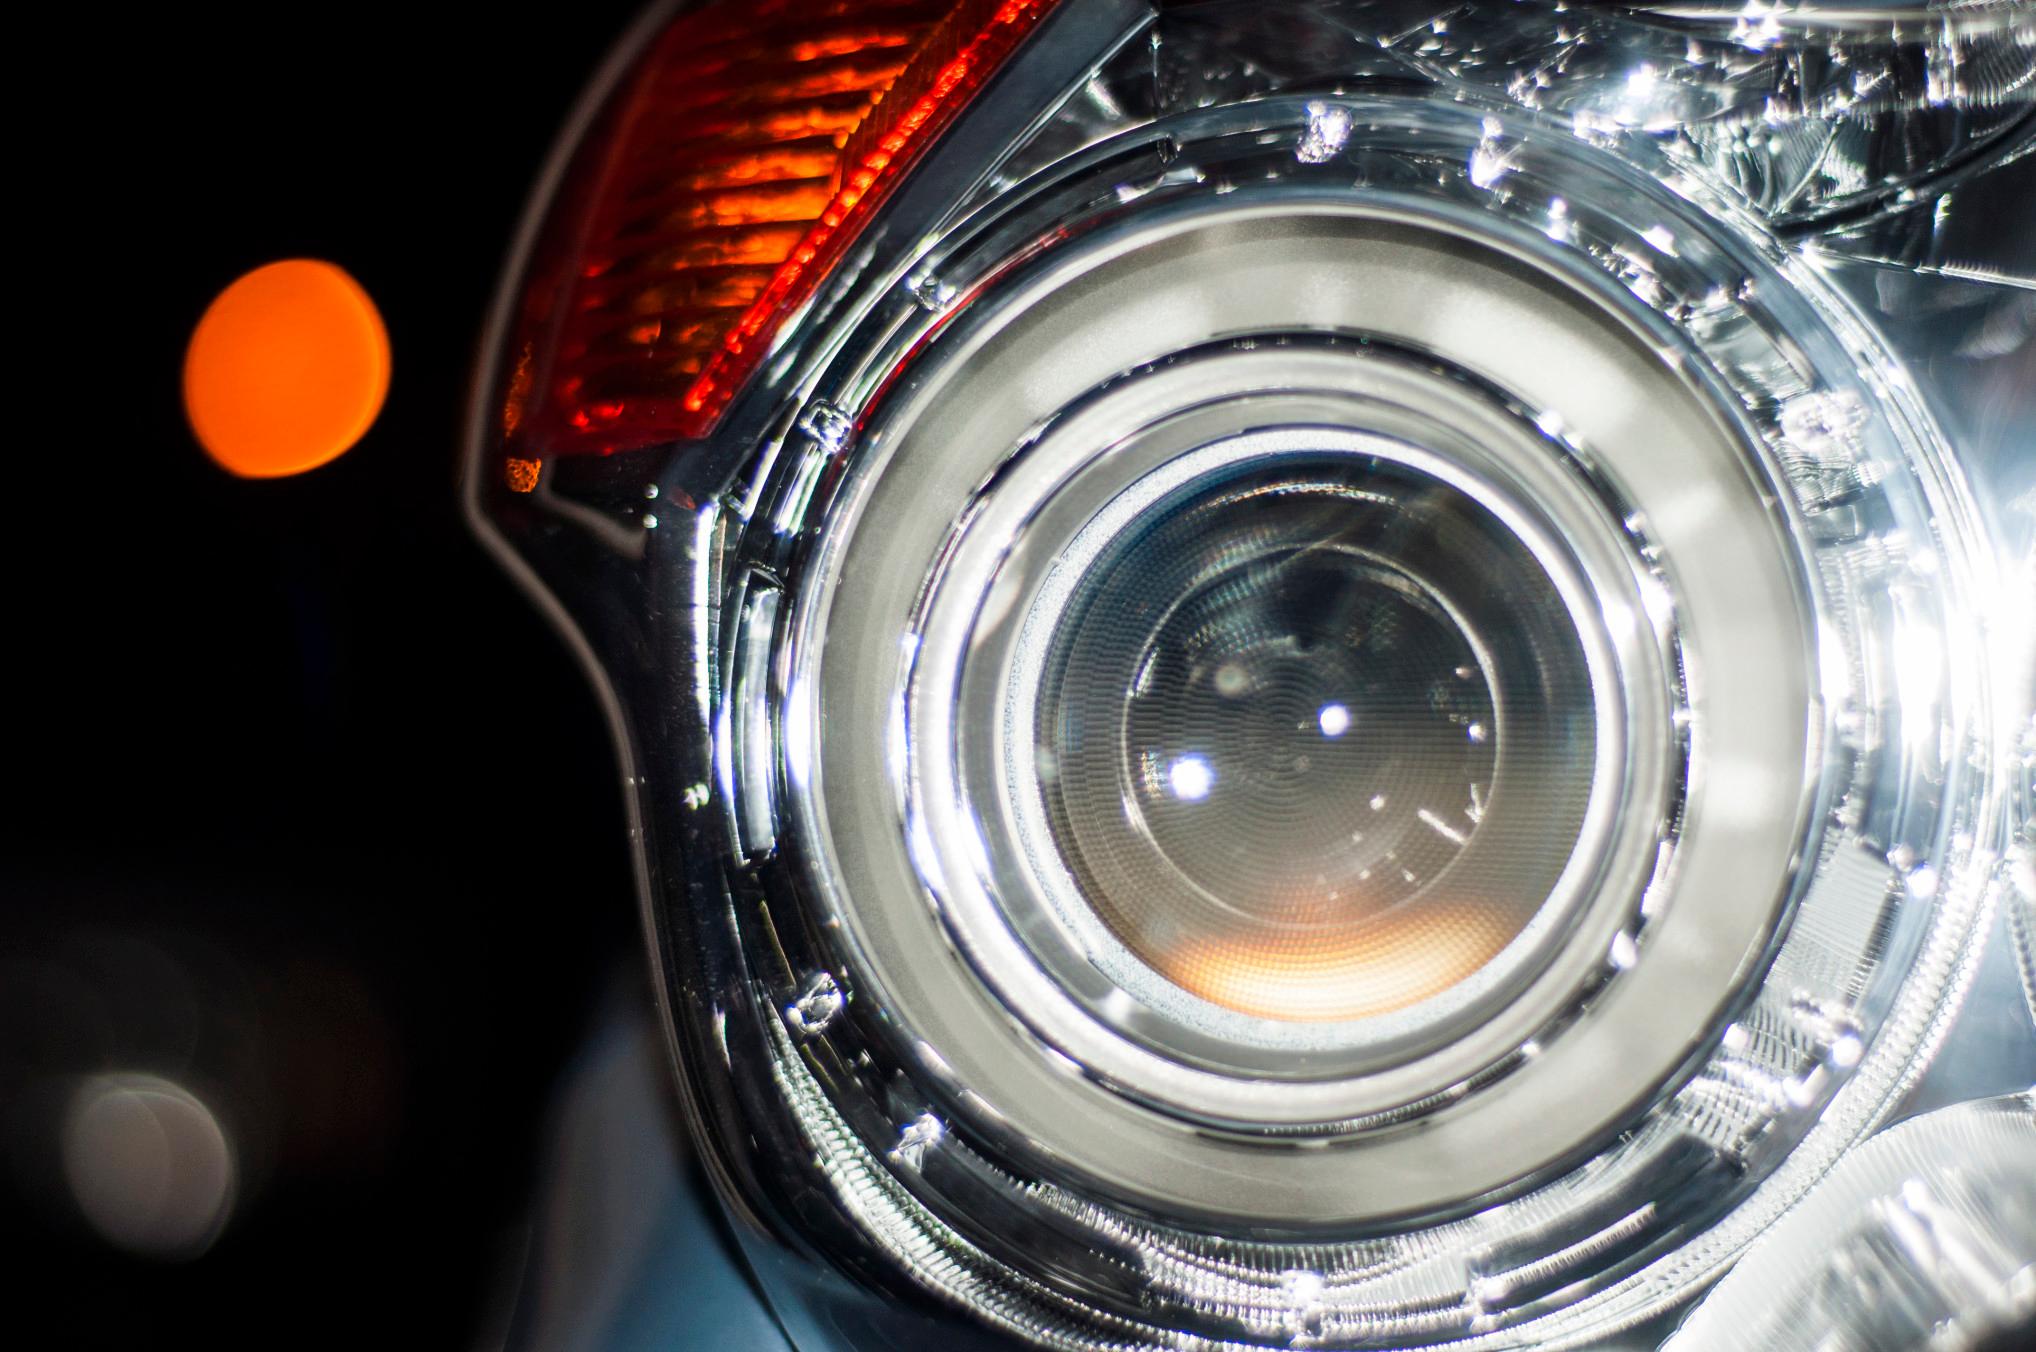 A close up shot of a headlight on a car.